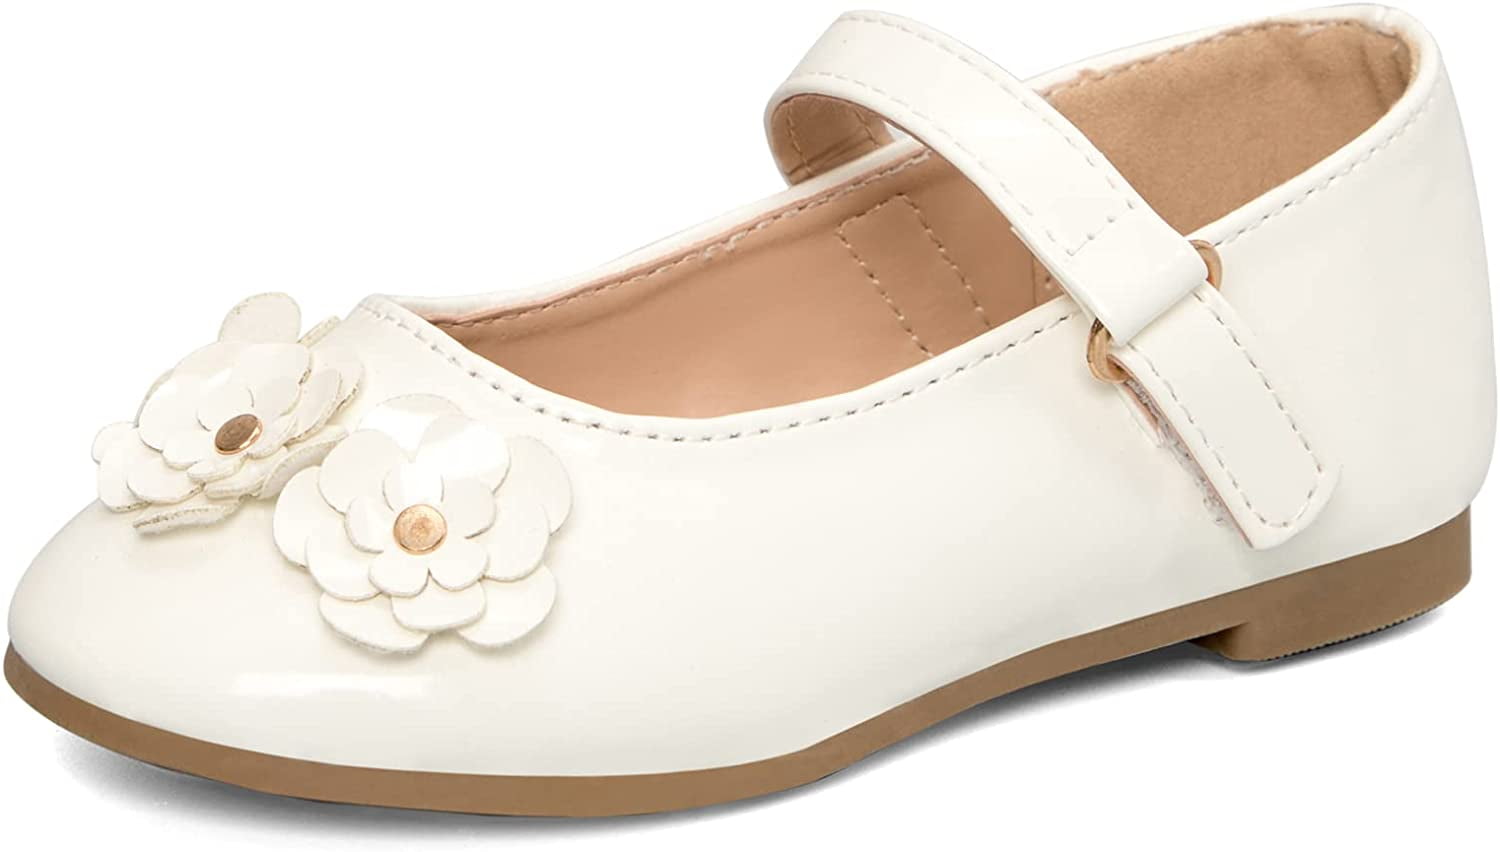 K KomForme Girl's White Flower Flats Soft Mary Jane Dress Party Shoes ...